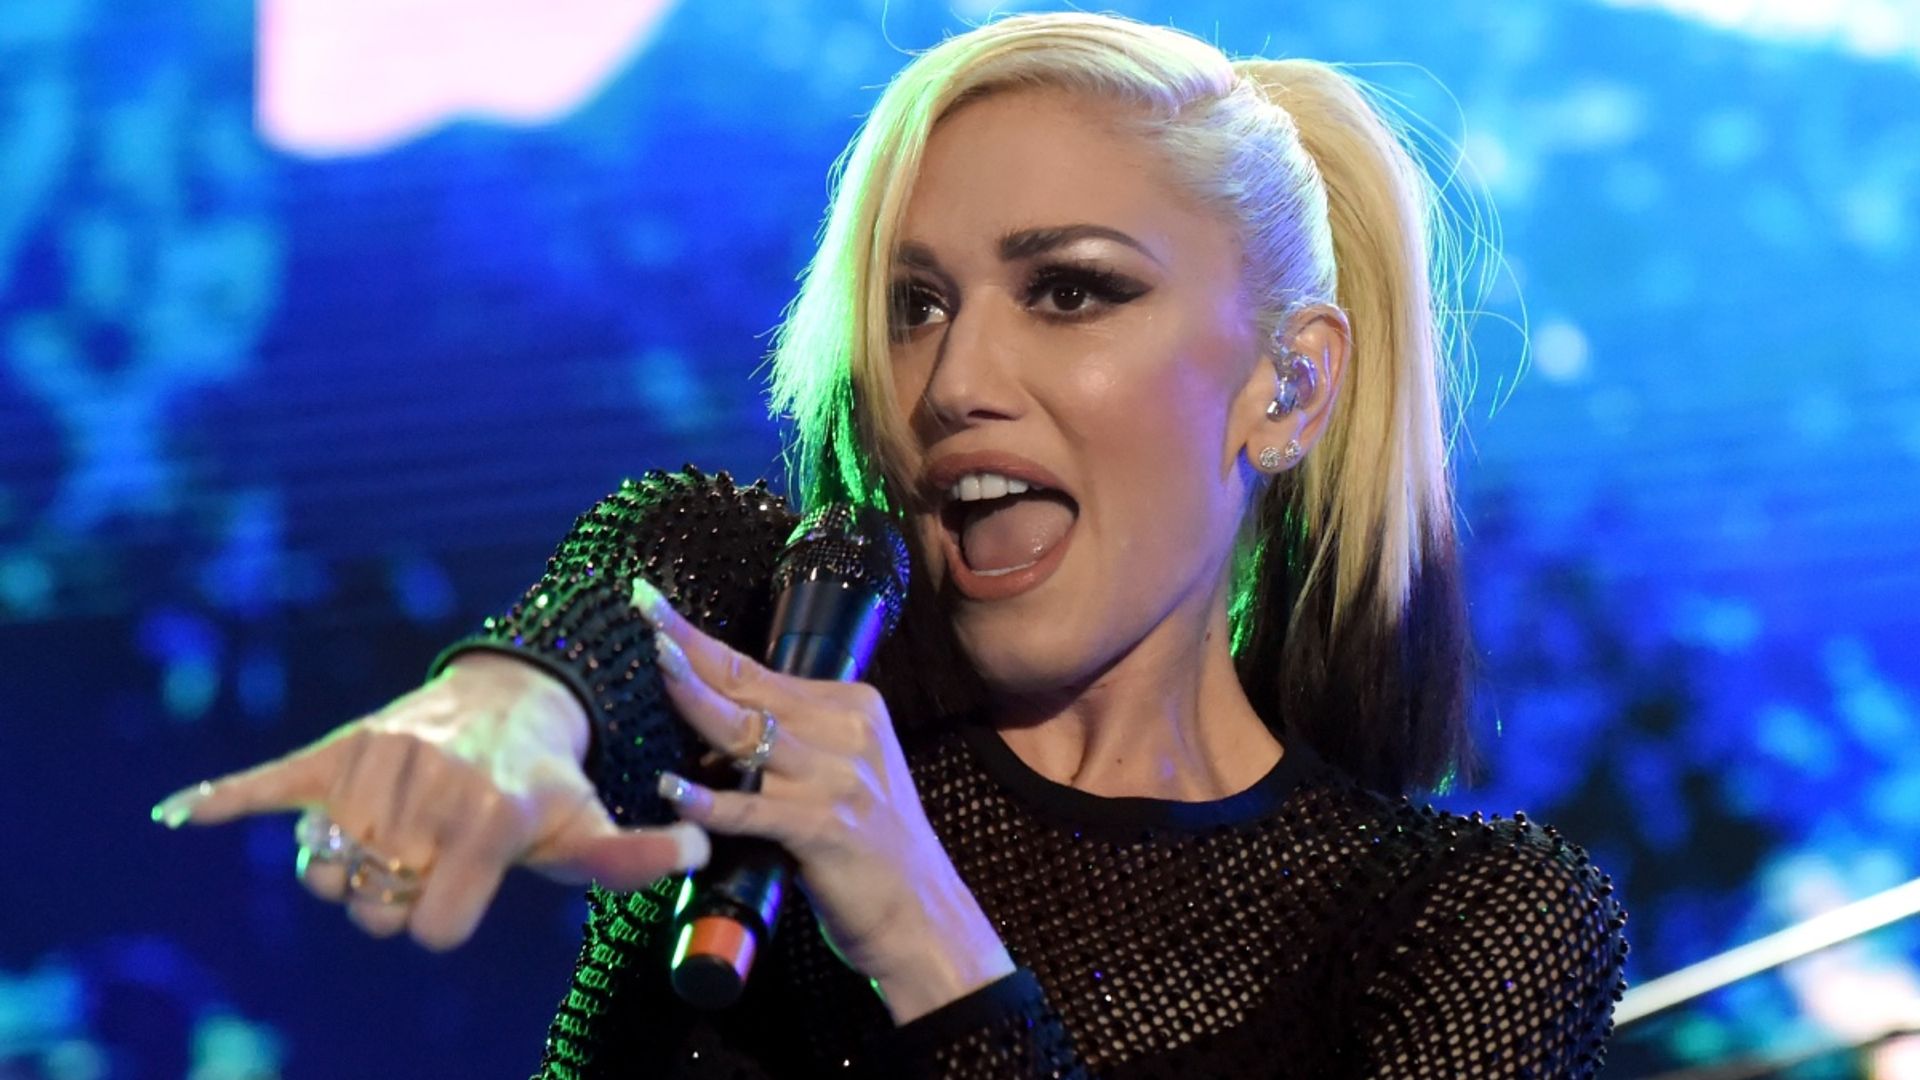 Gwen Stefani’s surprising new video gets fans talking as she prepares for UK tour